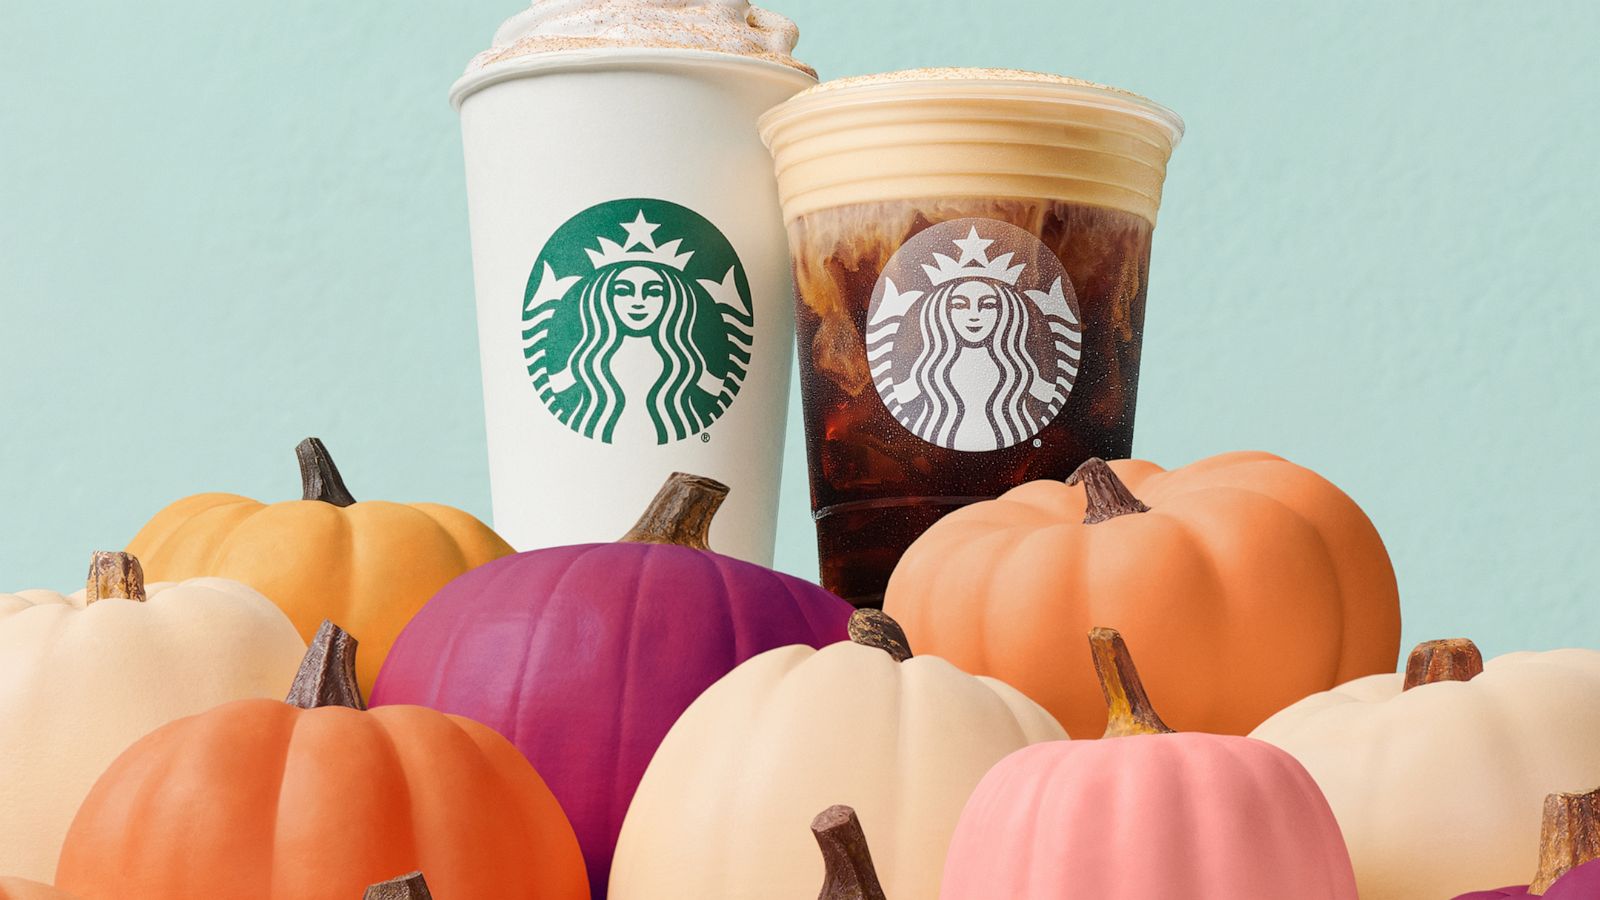 The Starbucks Pumpkin Spice Latte Has Officially Returned